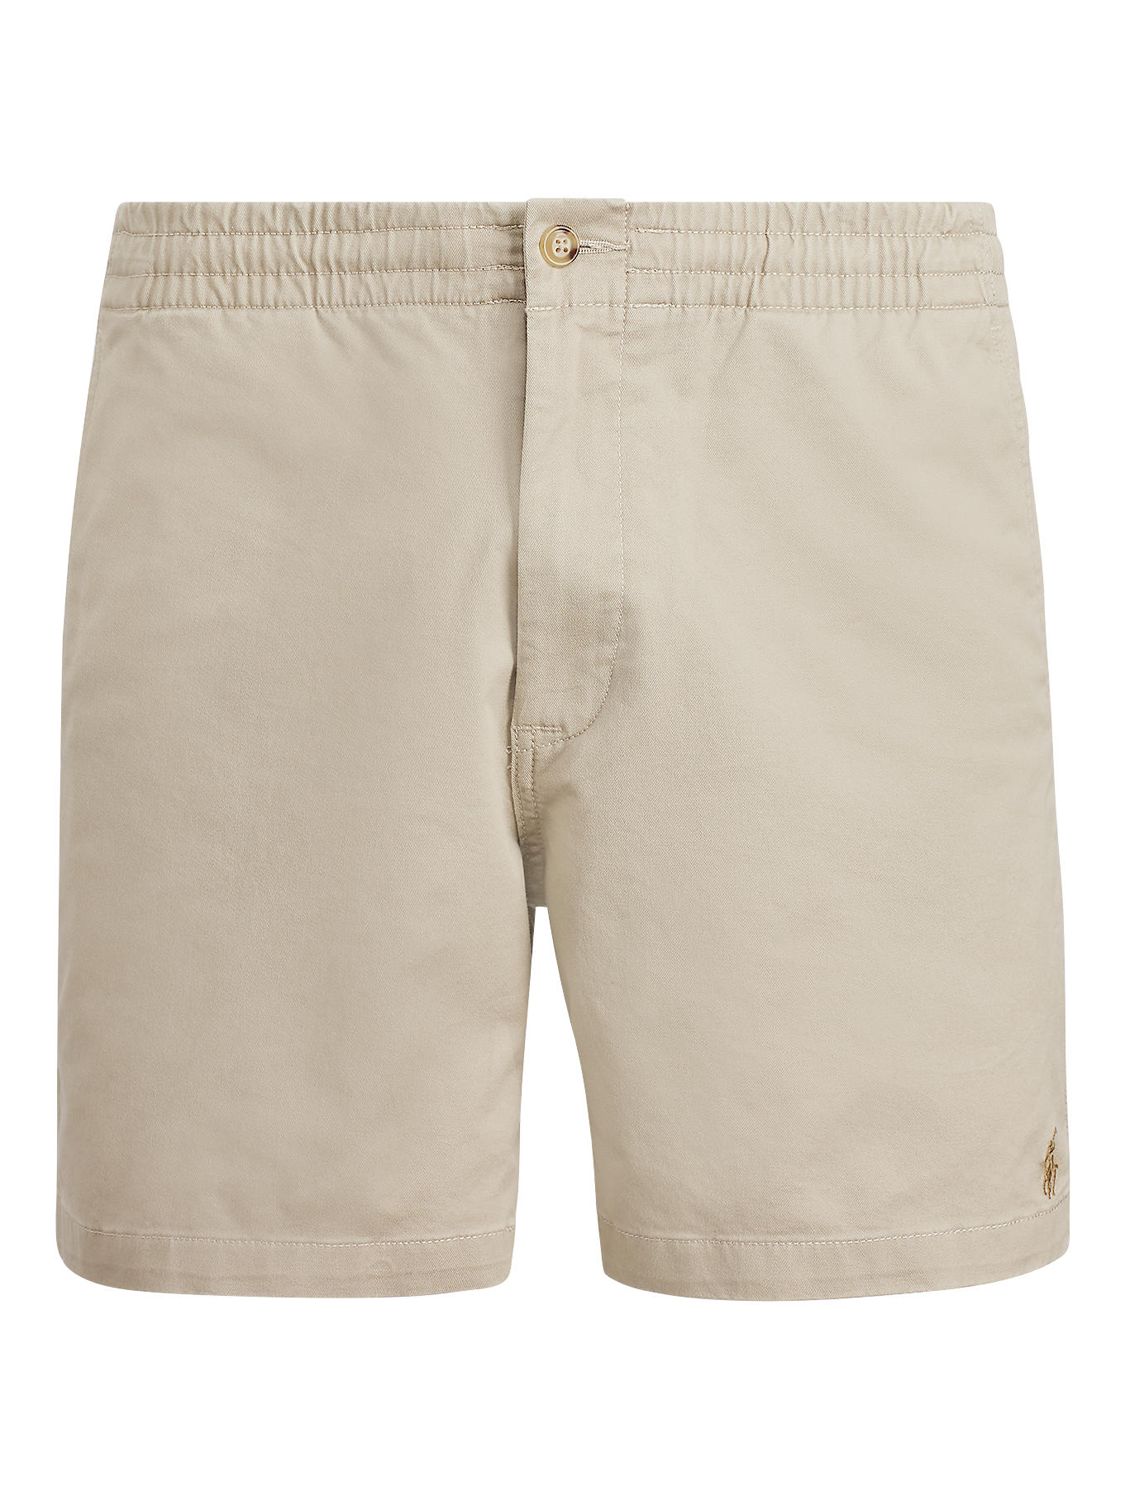 Polo Ralph Lauren Prepster Shorts, Brown, S